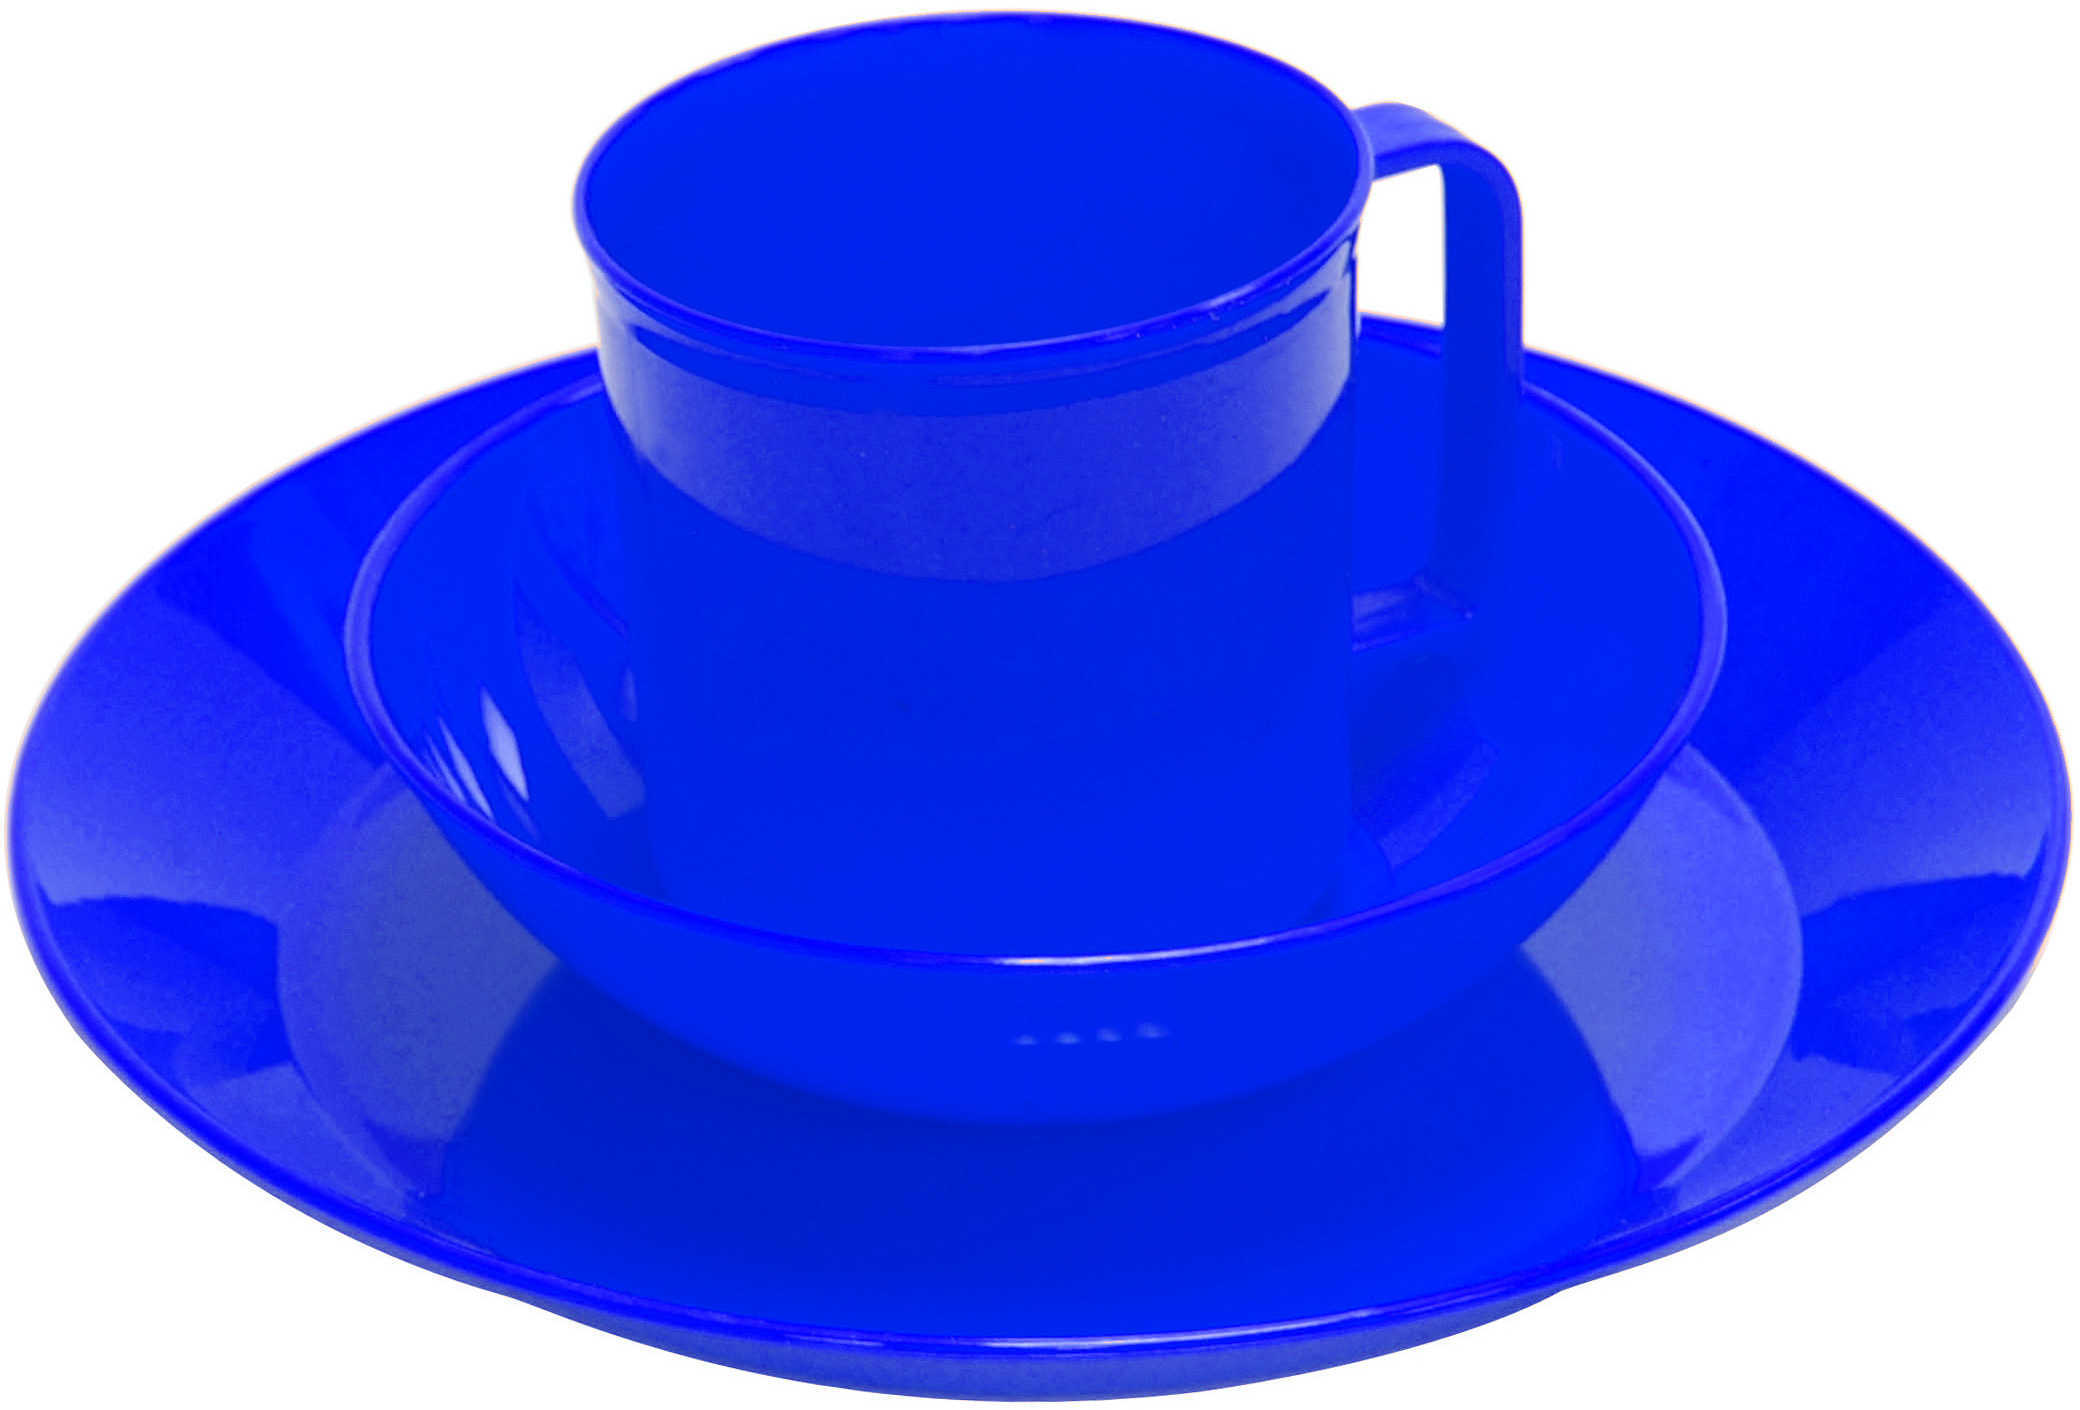 Chinook Acadia Tableware Set (Color: Blue)